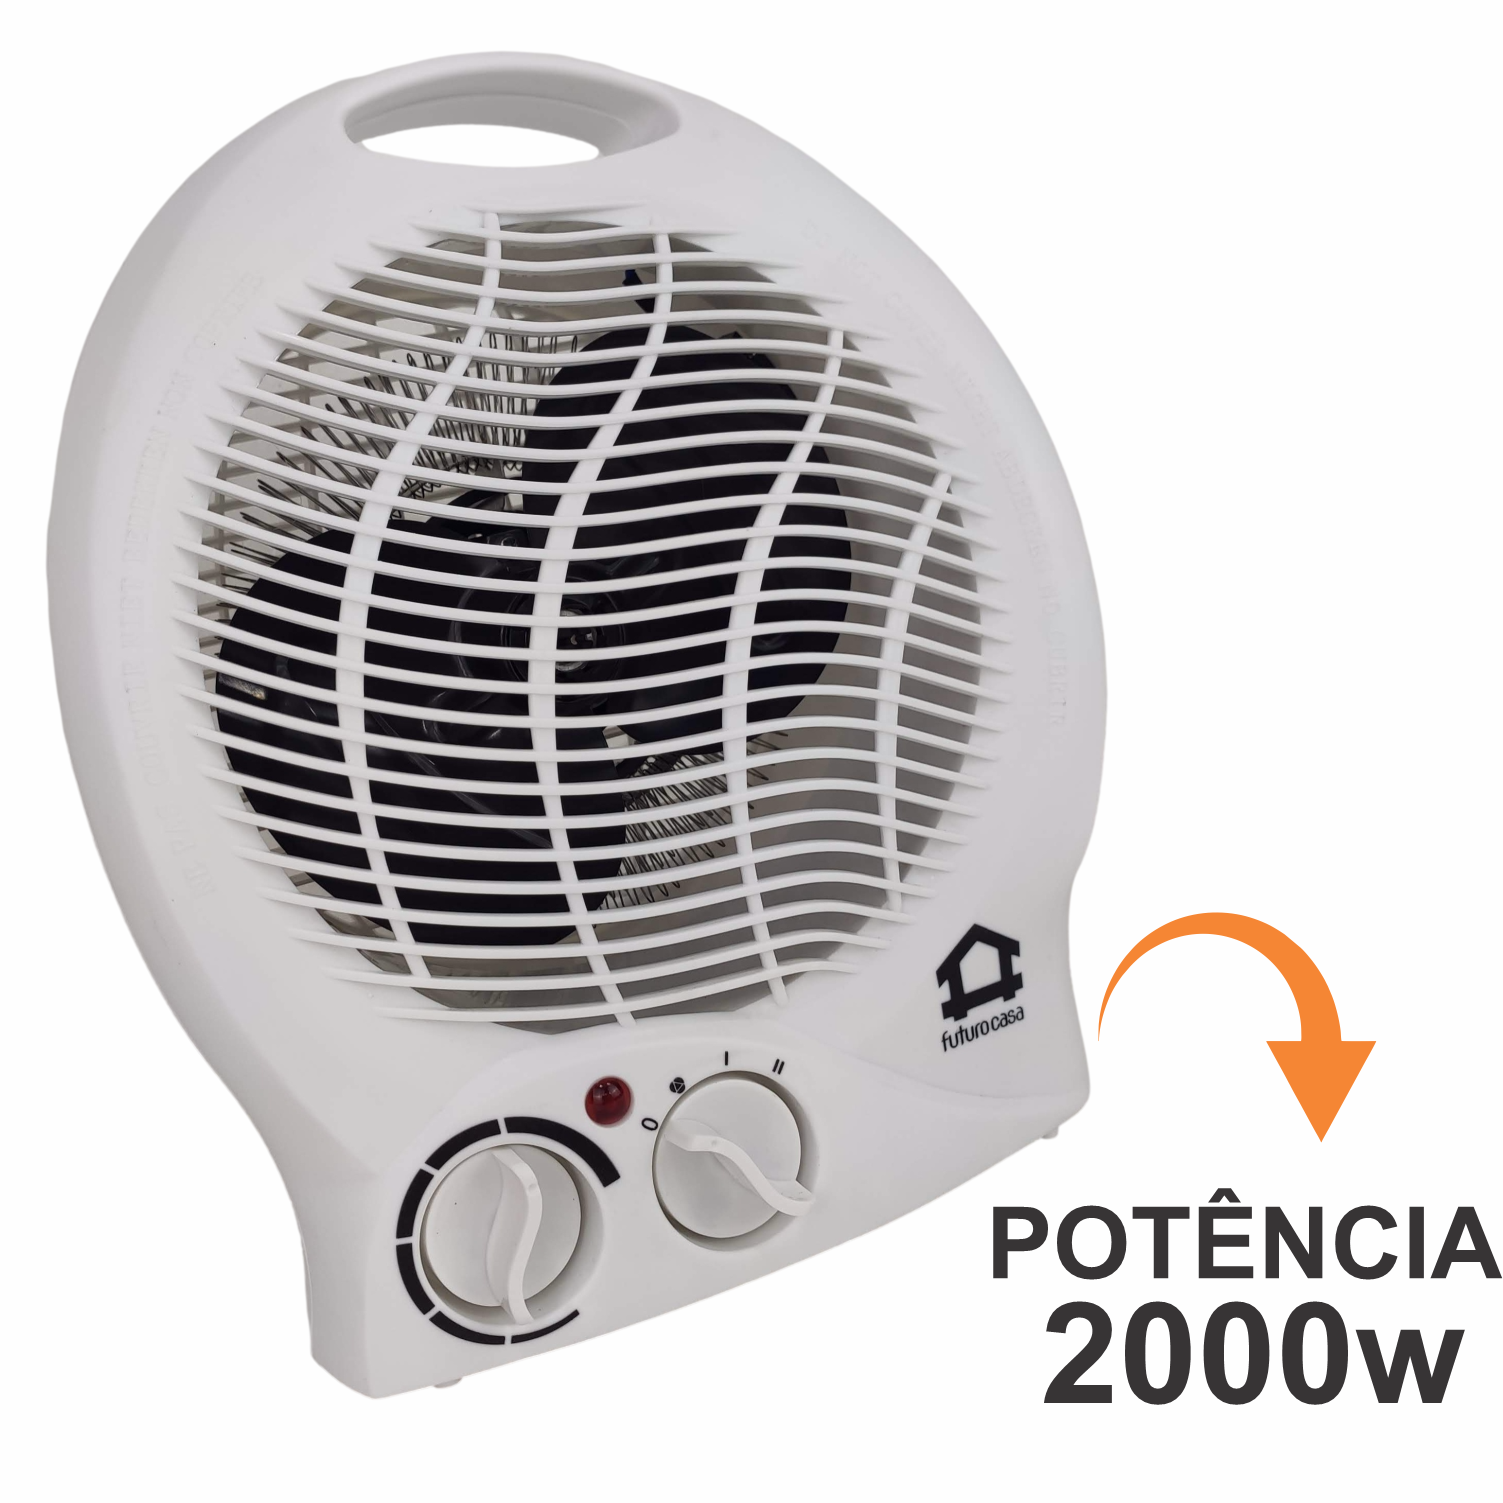 Aquecedor de Ar Elétrico Portátil 2000w Potência Controle Temperatura Aquece Ventilador 220v - 2